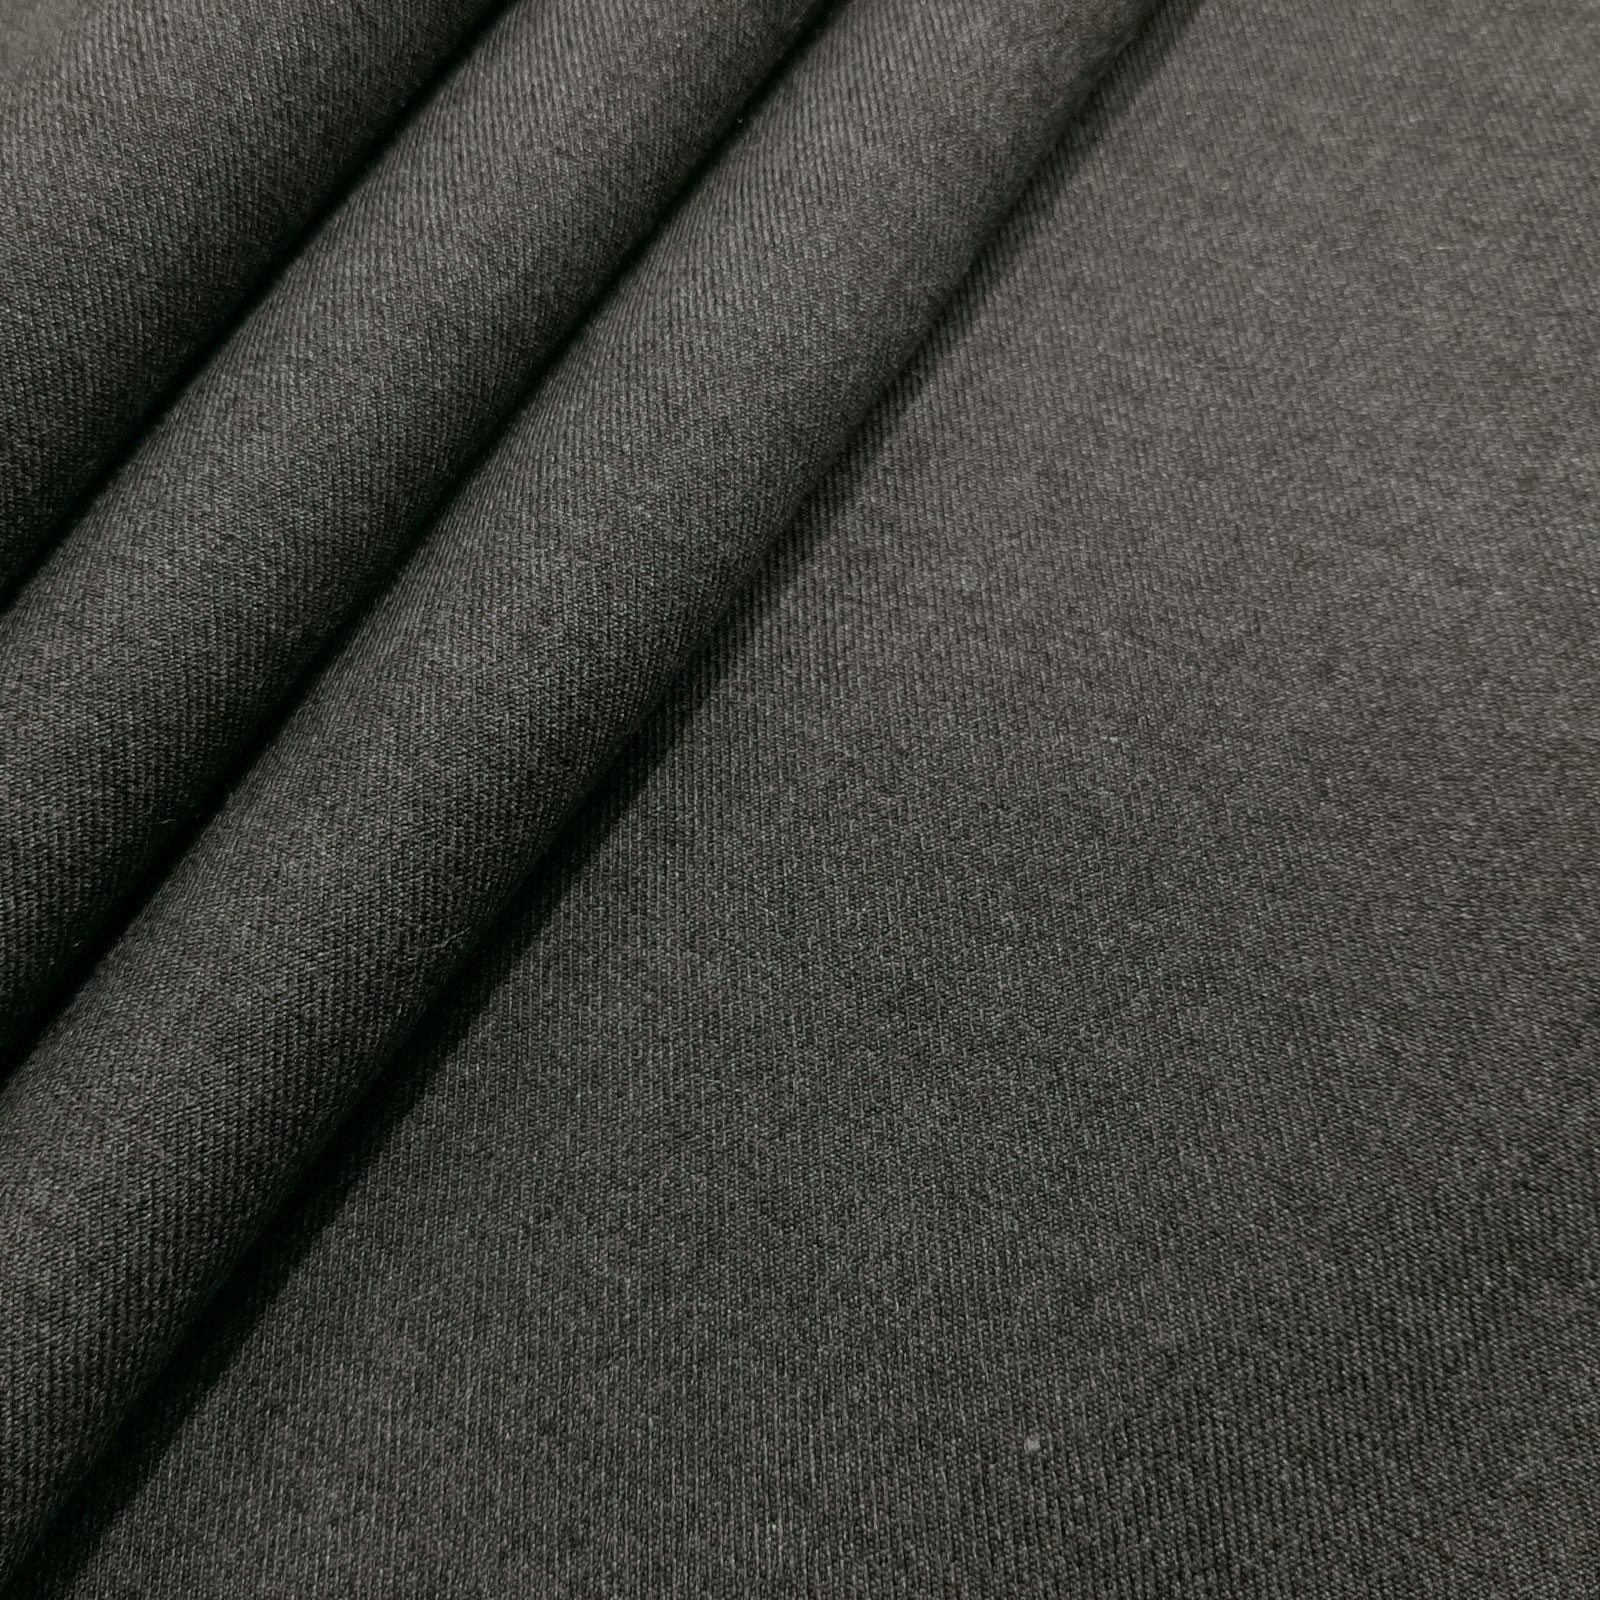 Zafer - Aramid wool upholstery fabric - flame retardant - Dark grey-melange